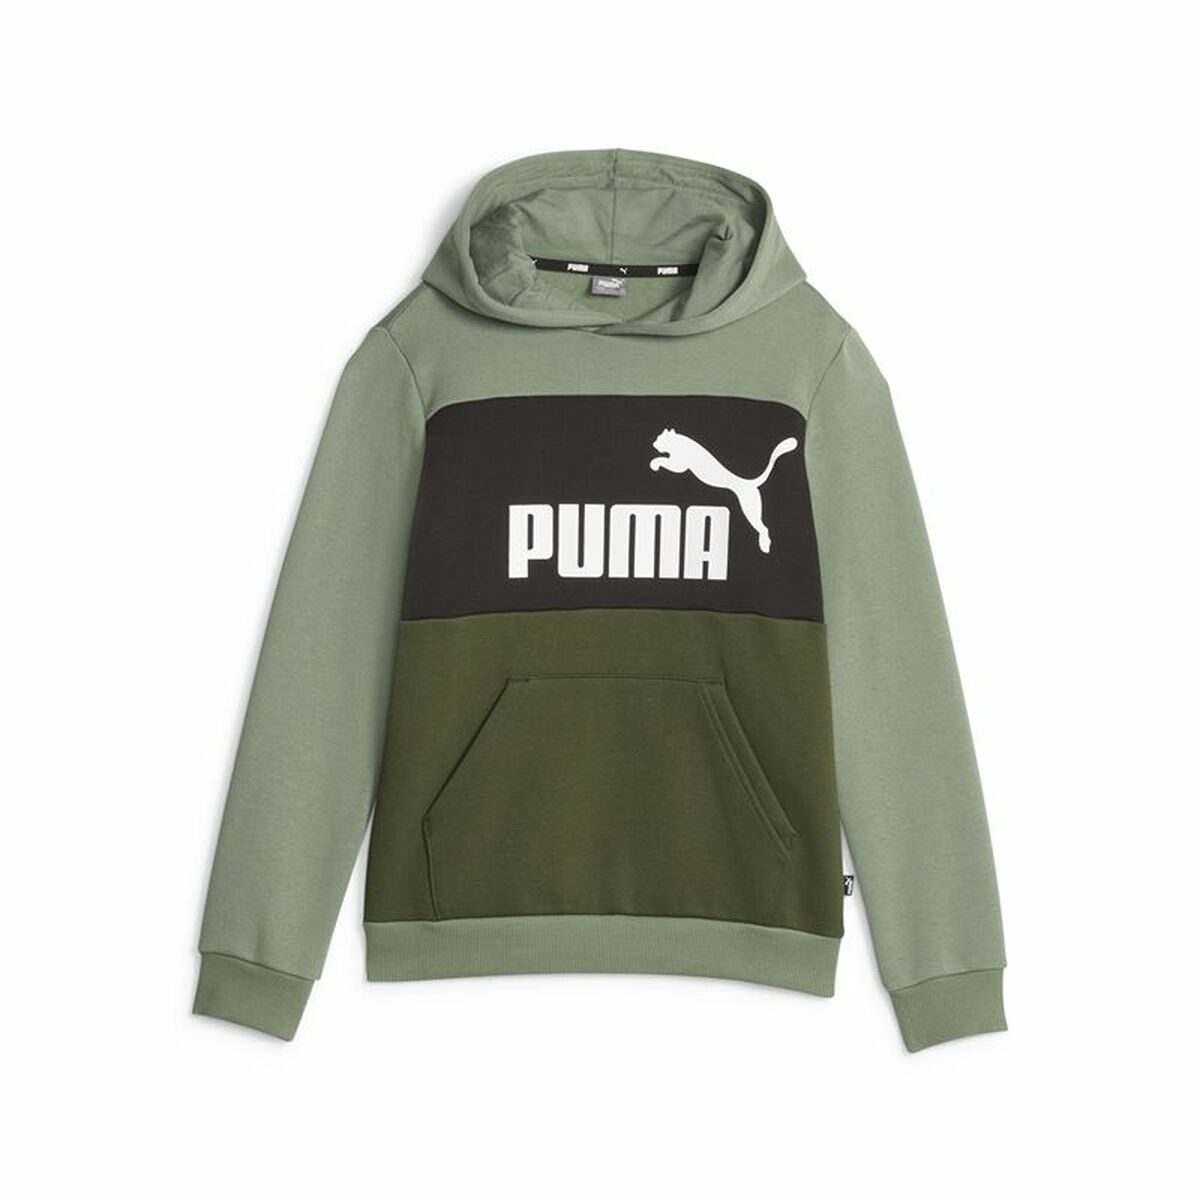 Kaufe Kinder-Sweatshirt Puma Ess Block Fl grün bei AWK Flagship um € 54.00